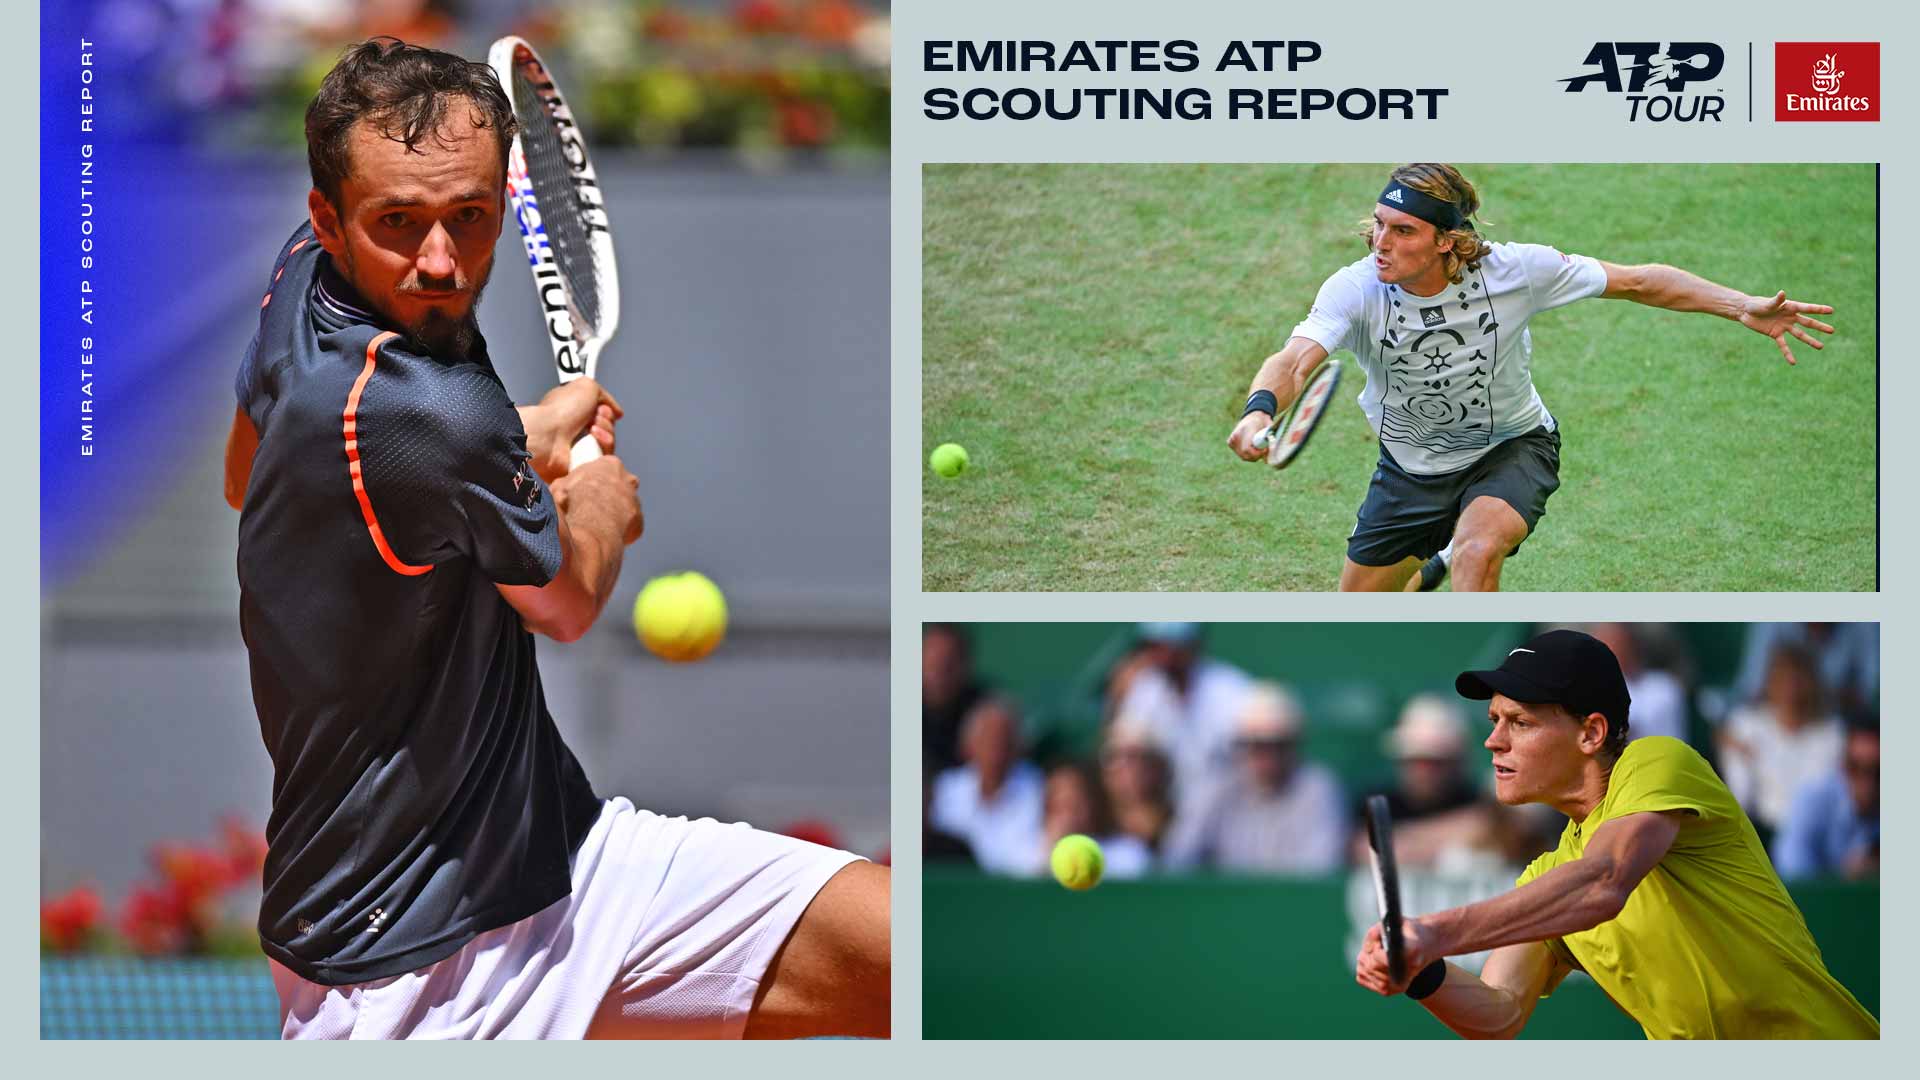 Daniil Medvedev, Jannik Sinner and Stefanos Tsitsipas will compete this week as the 2023 grass-court season begins on the ATP Tour.